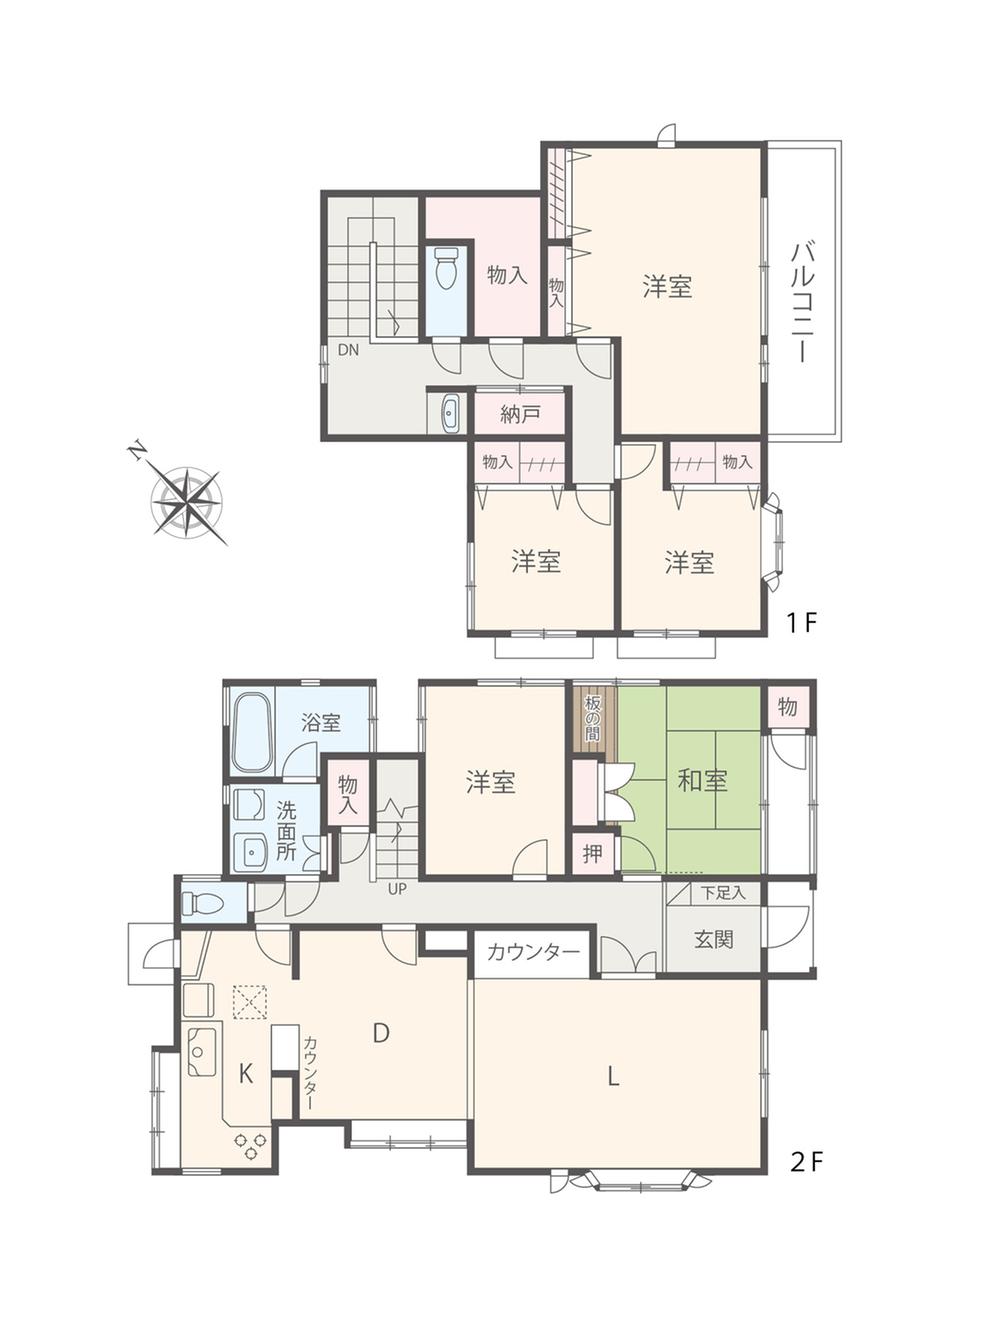 Floor plan. 78 million yen, 5LDK + S (storeroom), Land area 306.72 sq m , Building area 154.58 sq m 5LDK + S Guests can relax in the large-scale floor plan. 